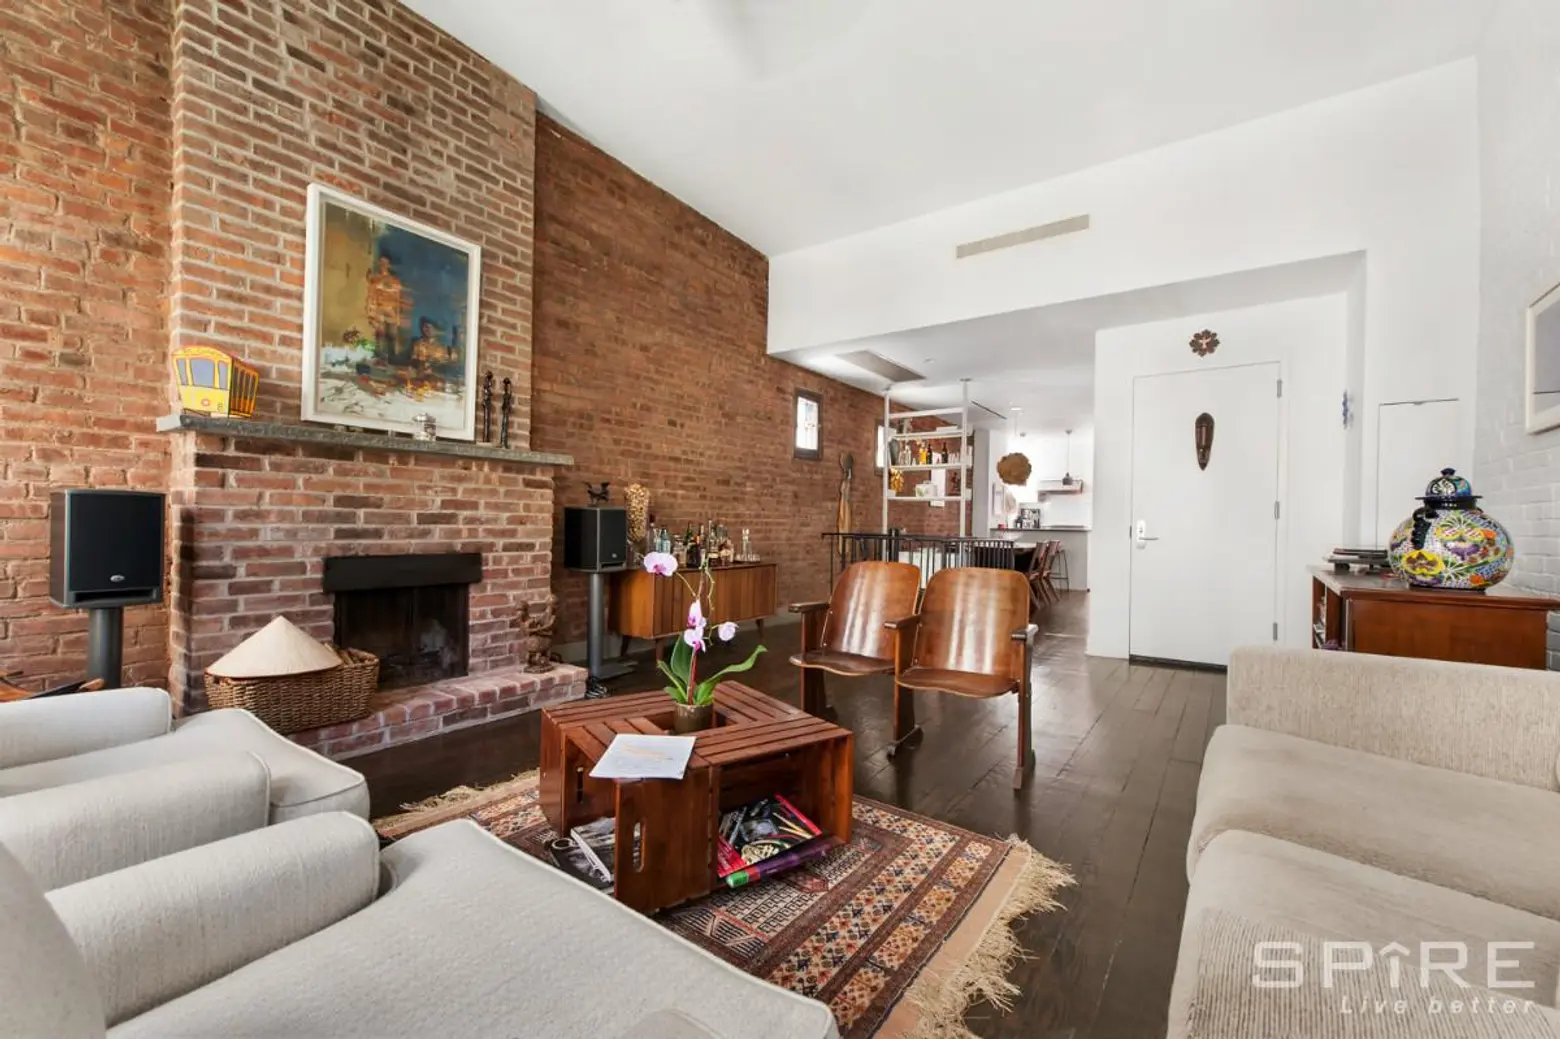 228 East 22nd Street, living room, exposed brick, duplex rental